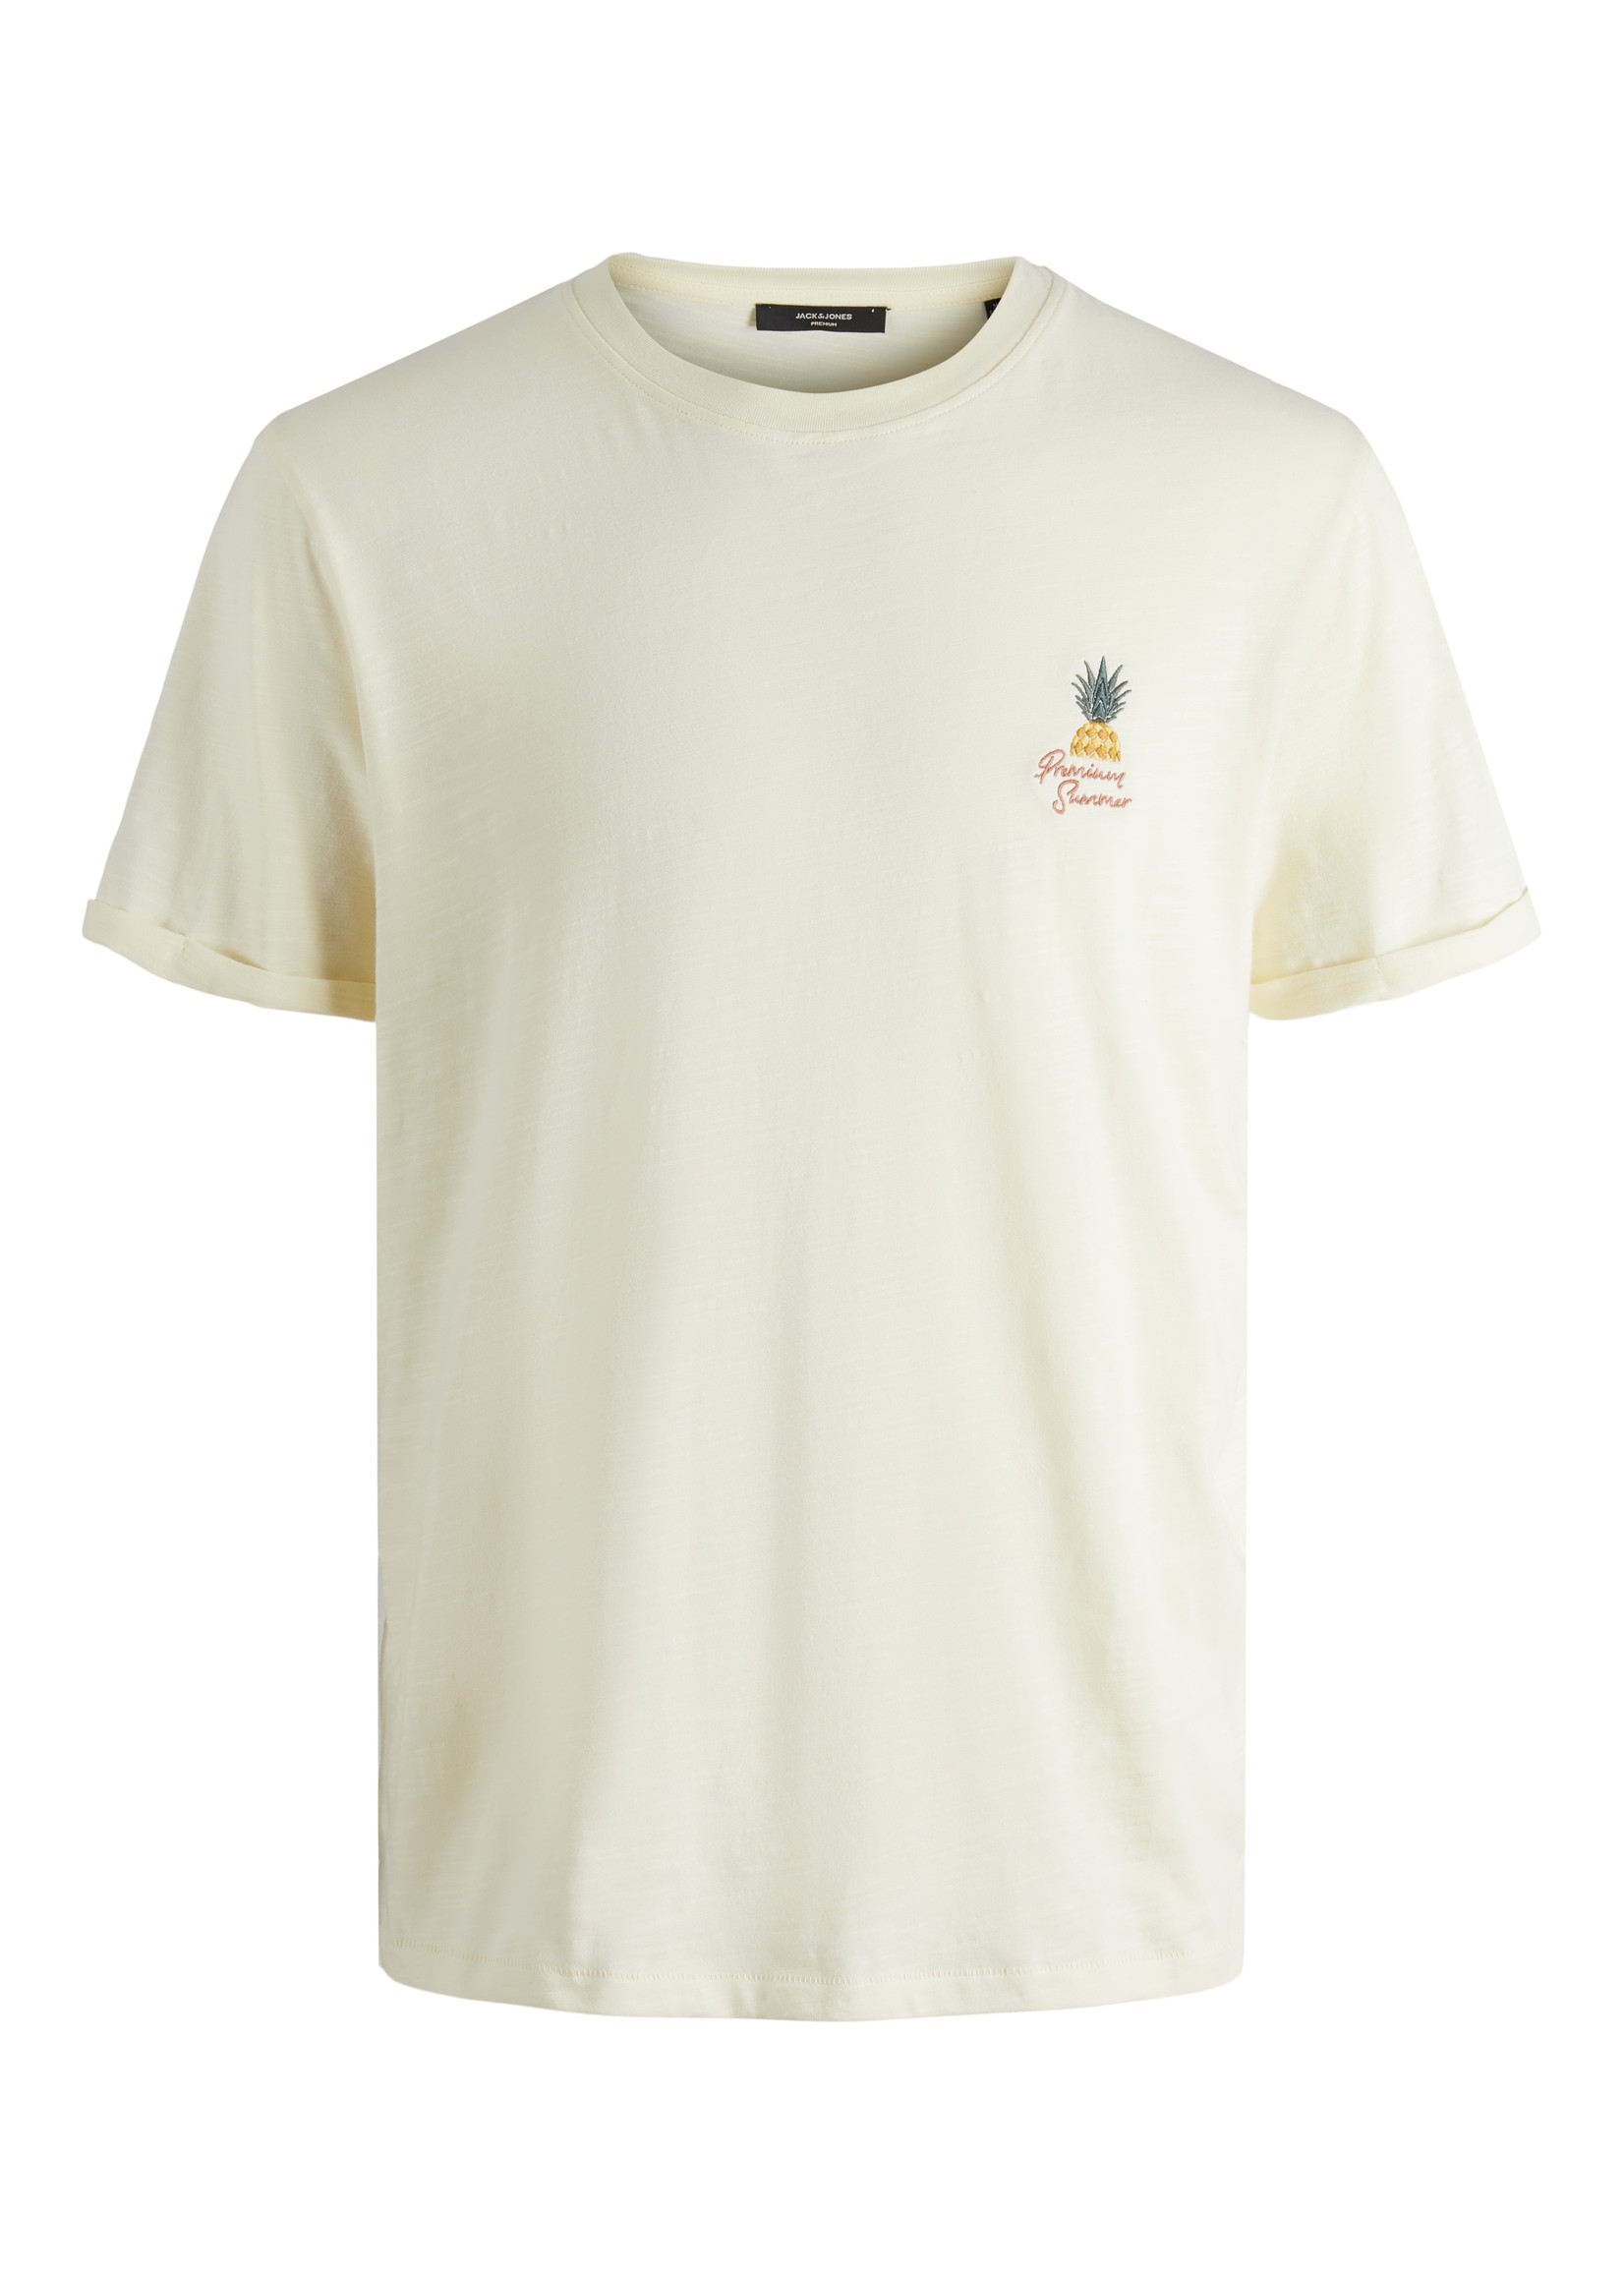 Jack & Jones T-shirt JprBlatropic Pear Sorbet/Surf